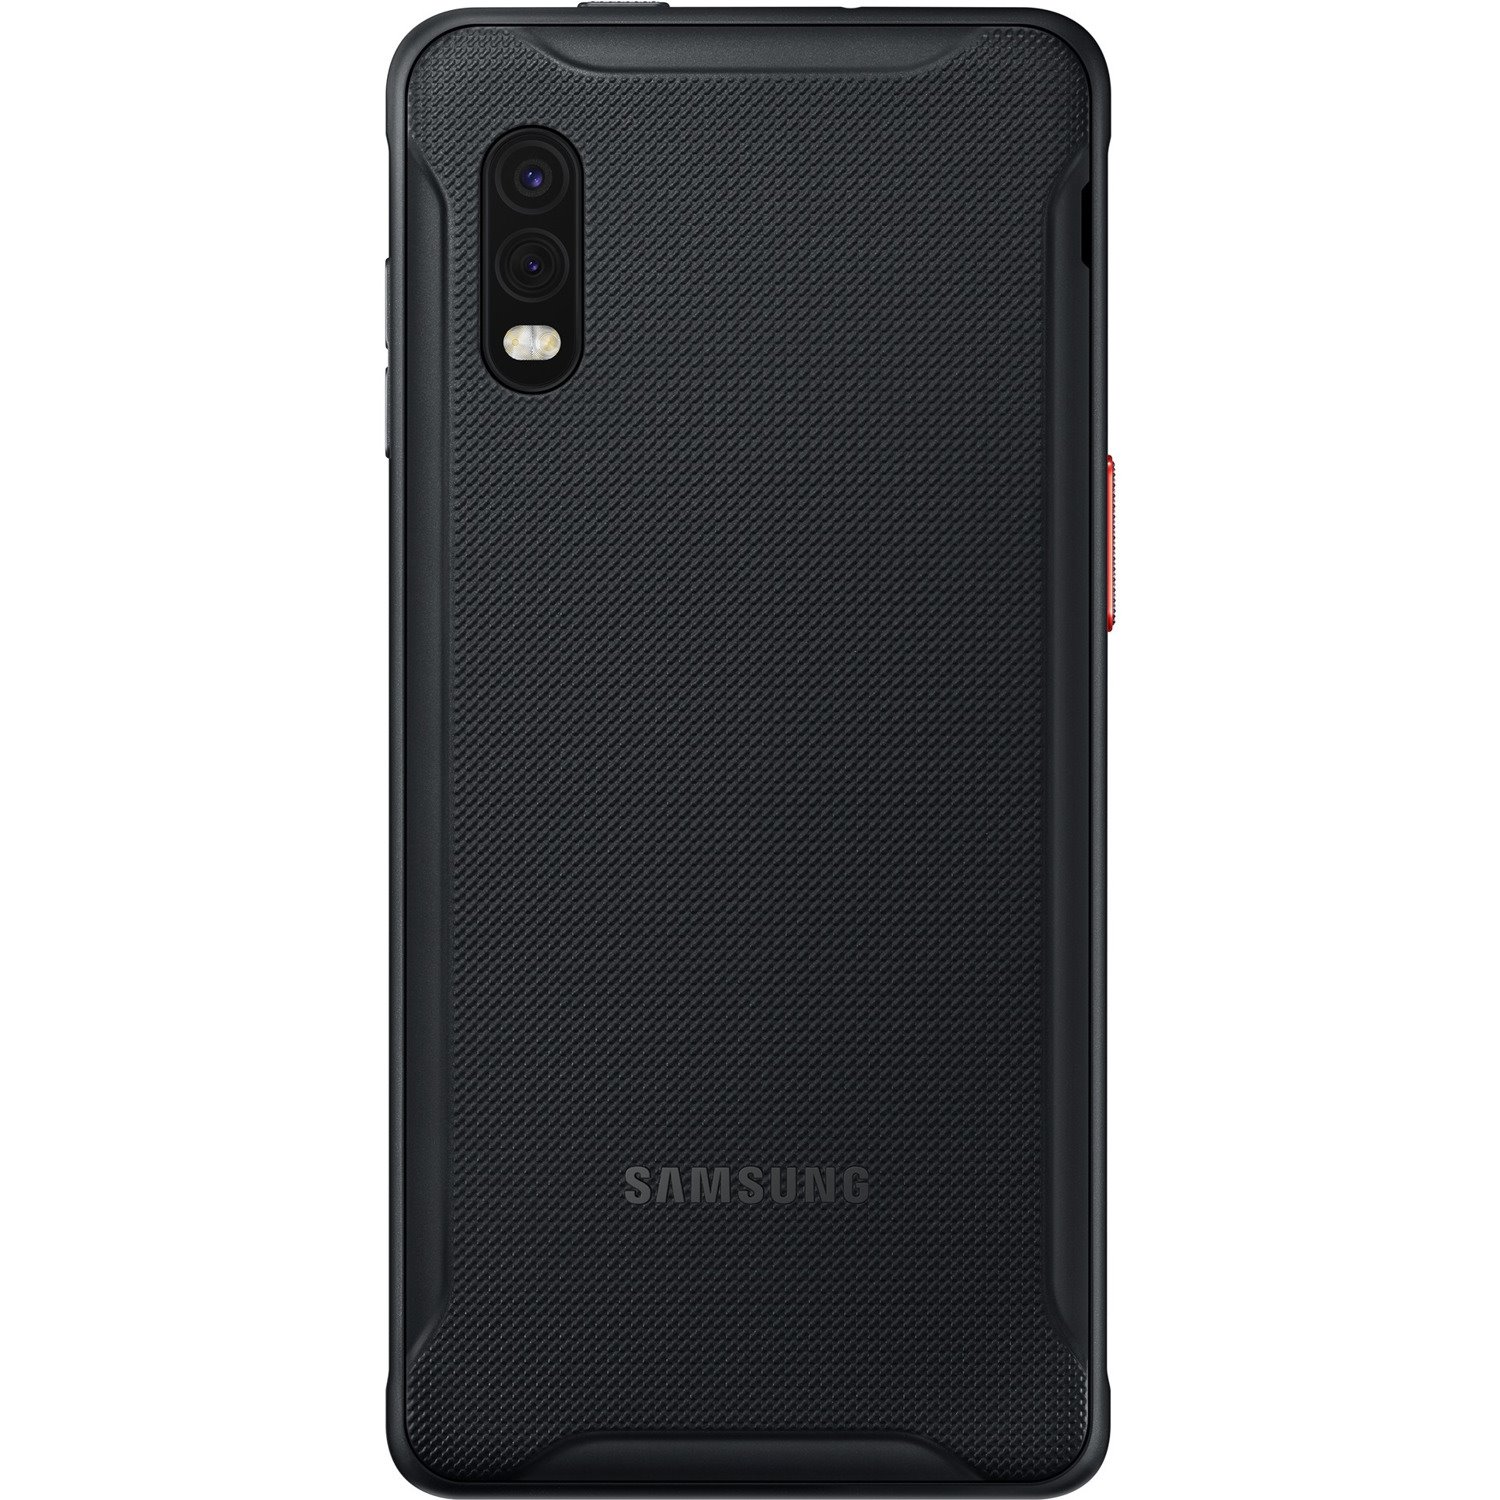 Samsung Galaxy XCover Pro 64 GB Smartphone - 6.3" Active Matrix TFT LCD Full HD Plus 2340 x 1080 - Cortex A73Quad-core (4 Core) 2.30 GHz + Cortex A53 Quad-core (4 Core) 1.70 GHz - 4 GB RAM - Android 10 - 4G - Black